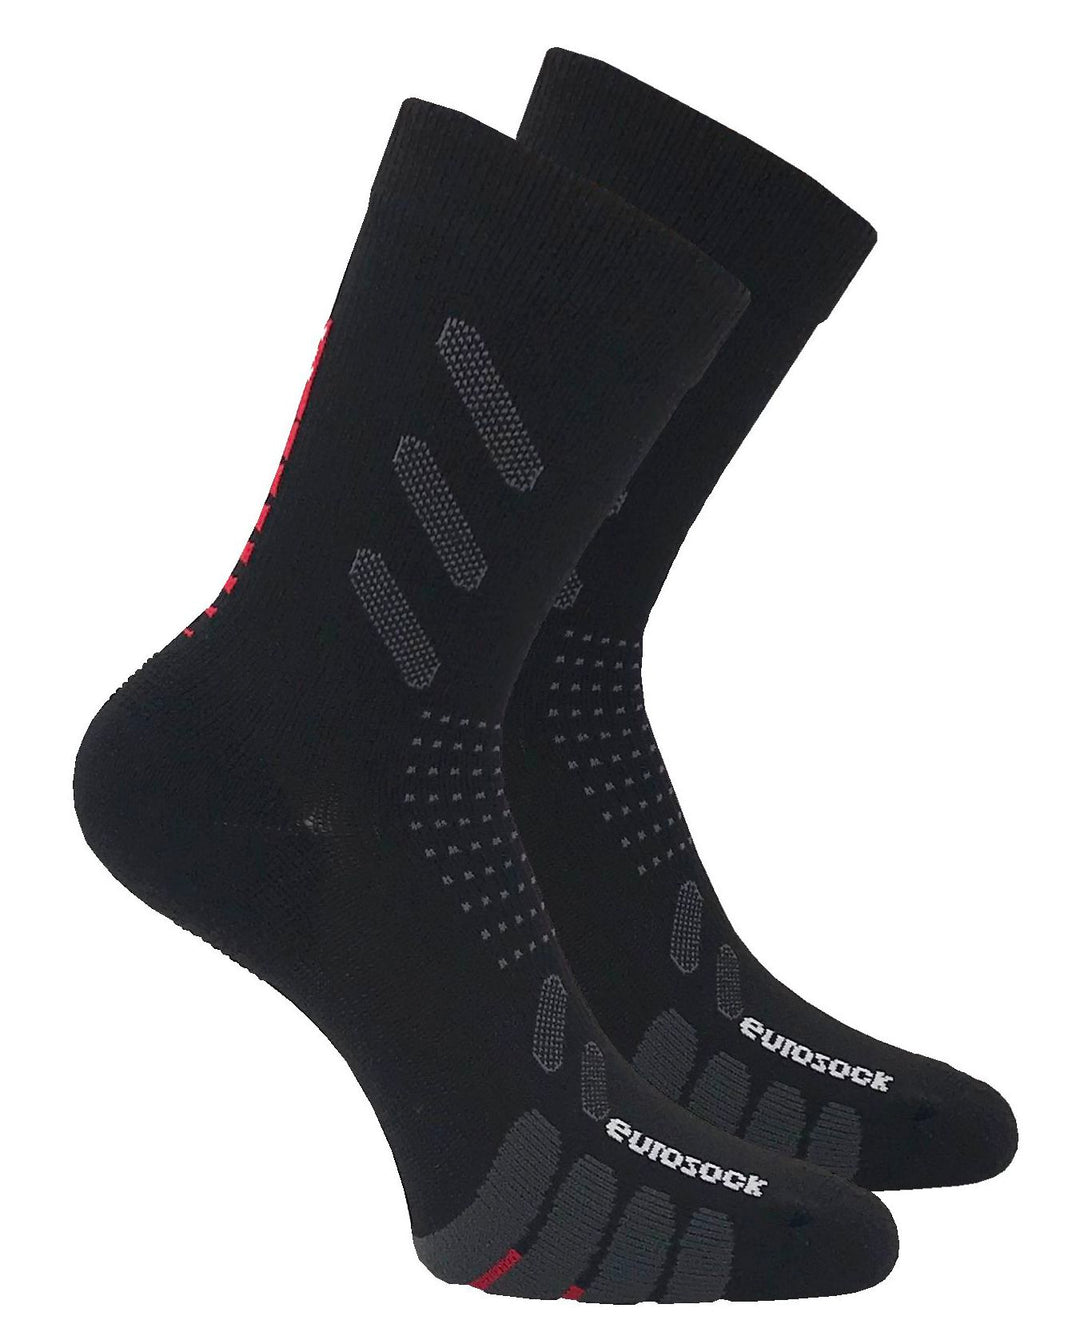 Bike Crew Compression Socks - Pair